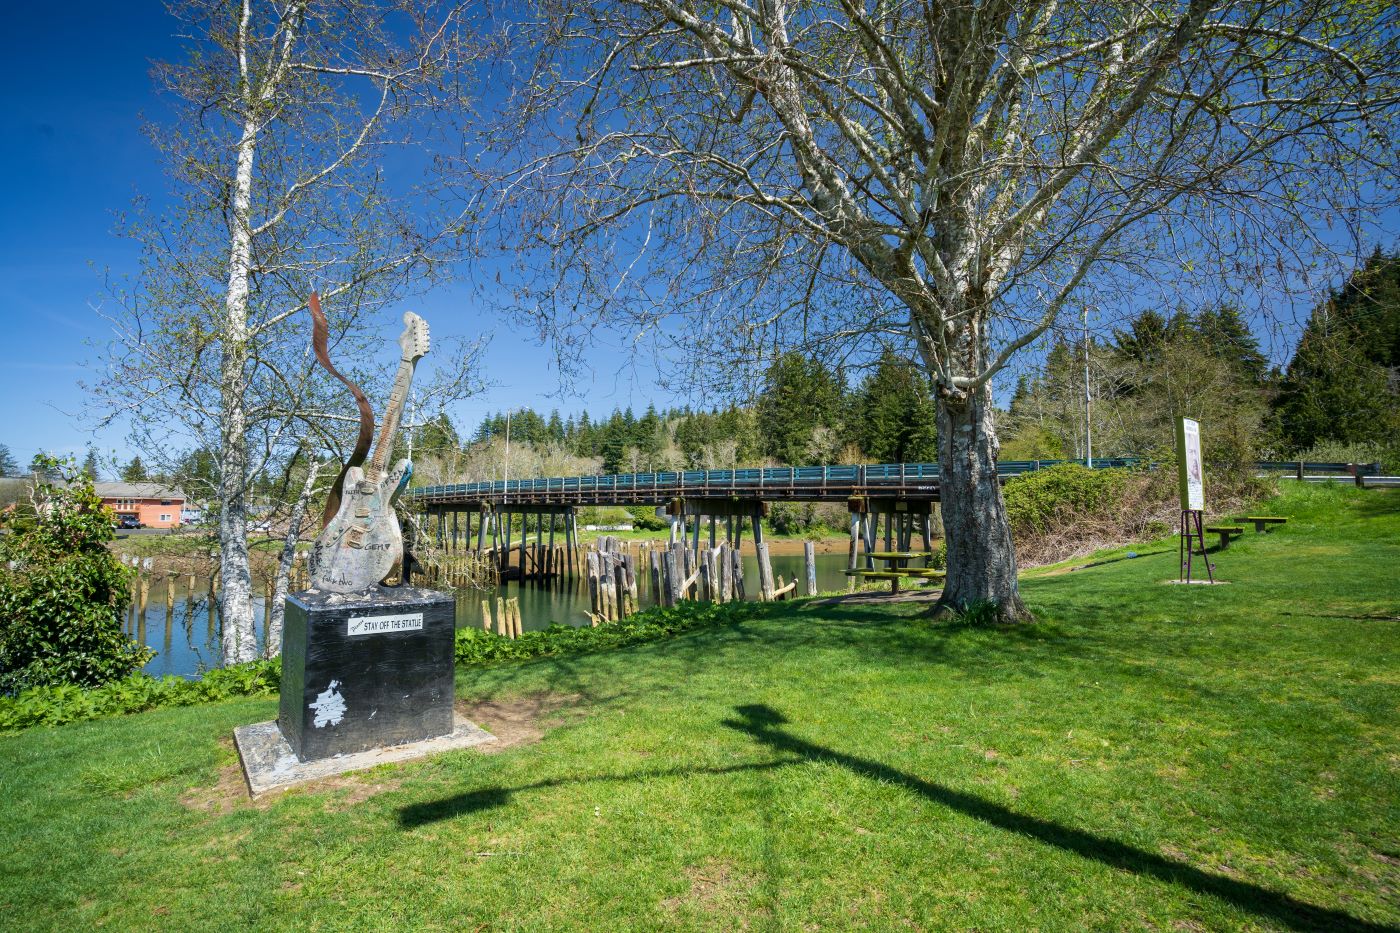 View of Kurt Cobain Memorial Park, directly next to the bridge.